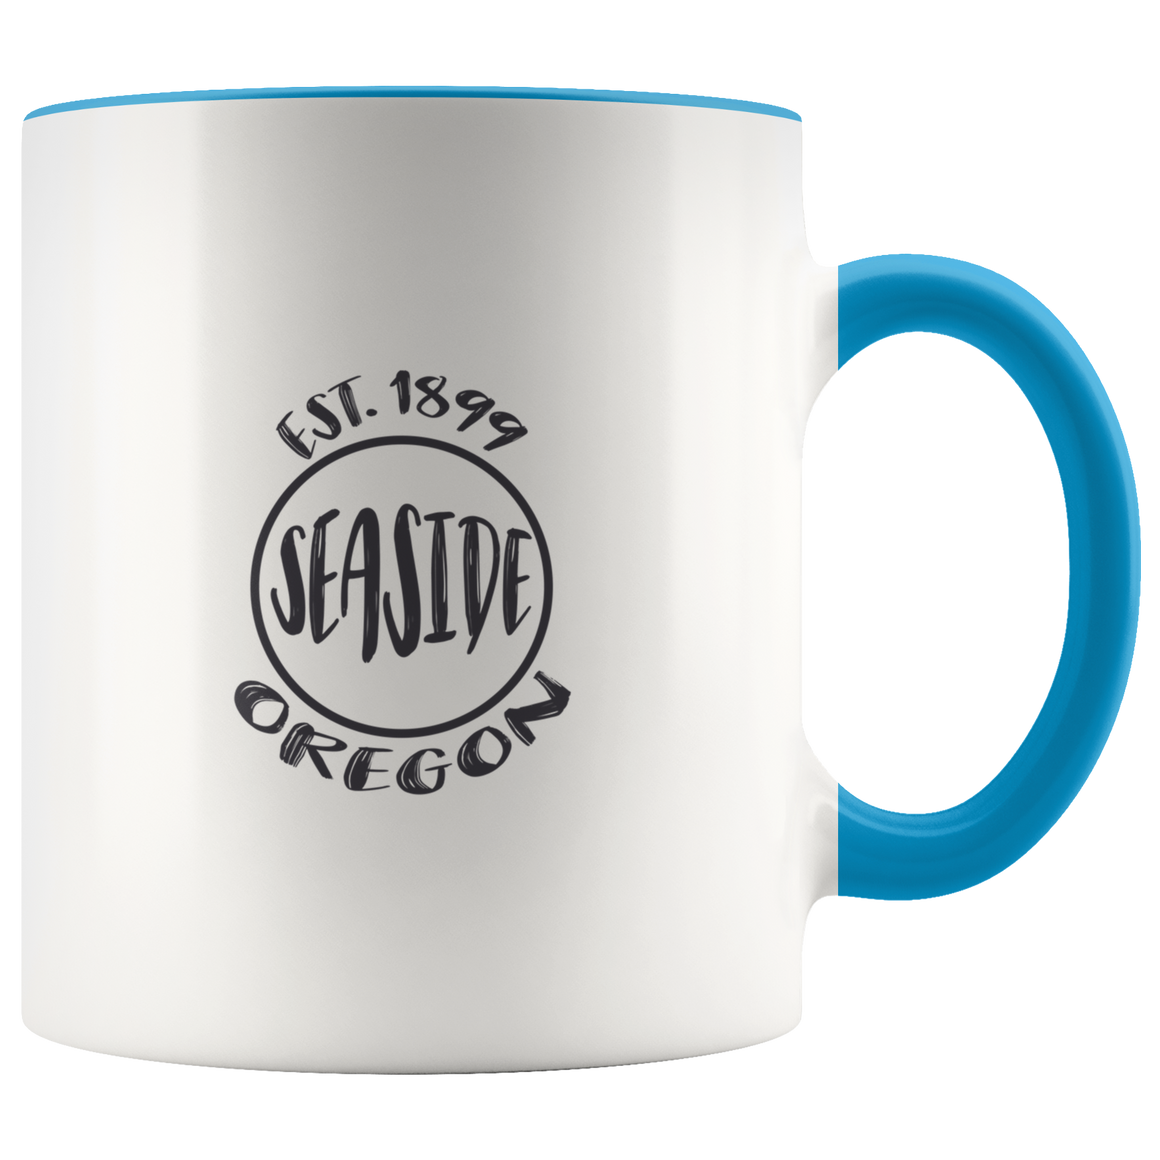 Seaside Oregon Accent Mug